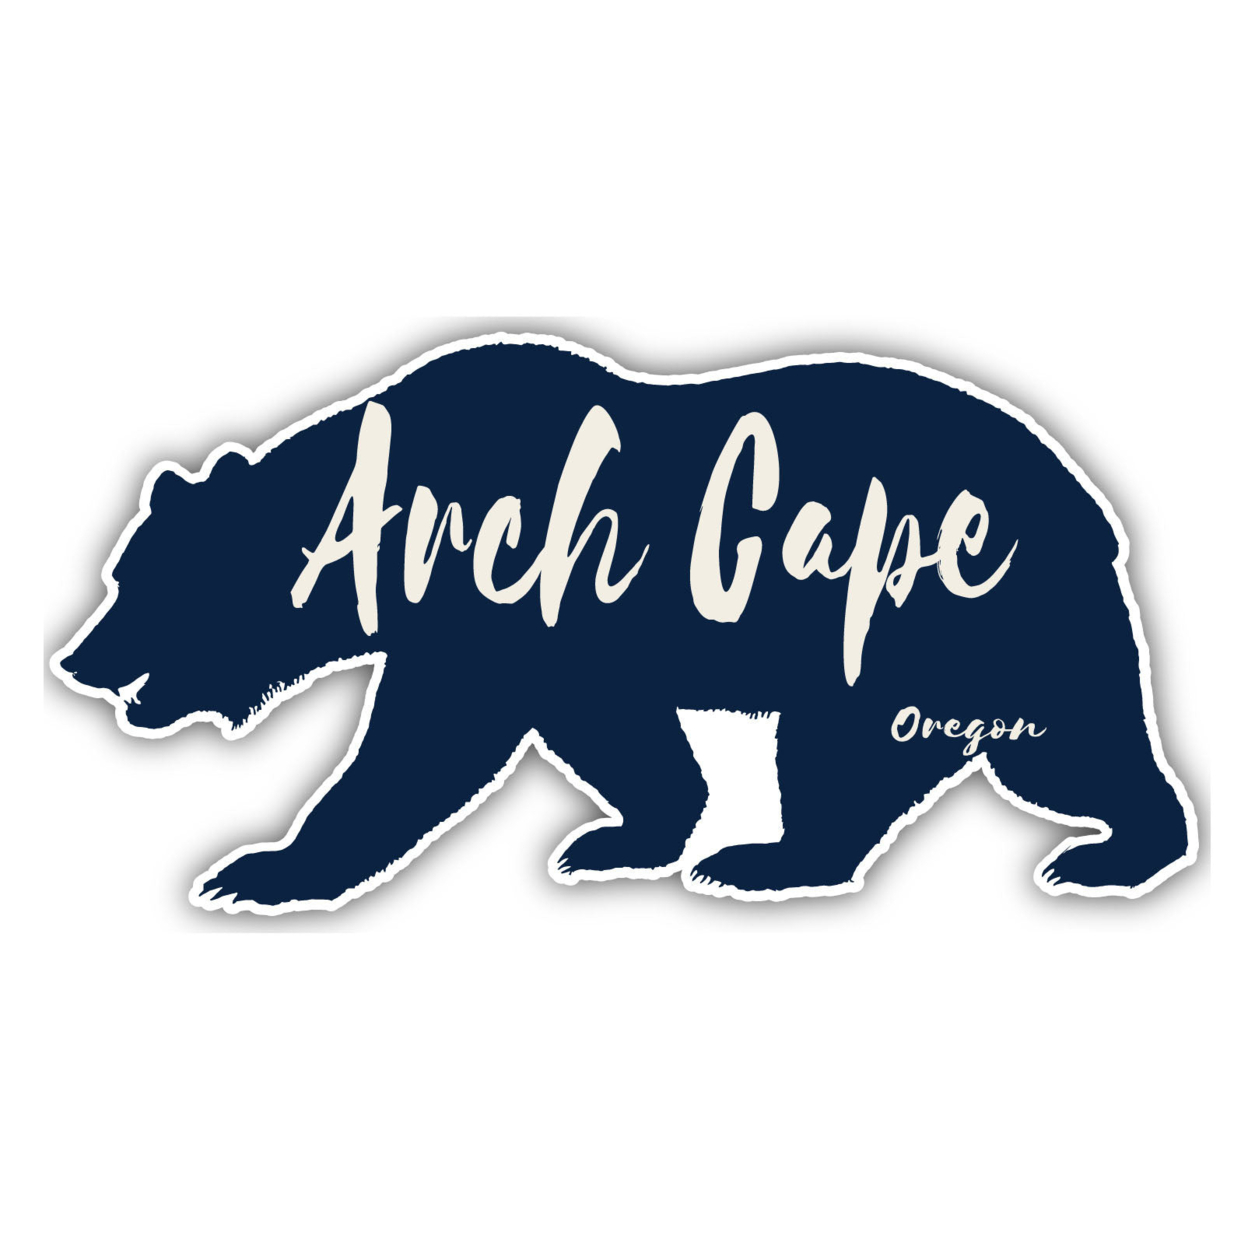 Arch Cape Oregon Souvenir Decorative Stickers (Choose Theme And Size) - 4-Pack, 12-Inch, Bear